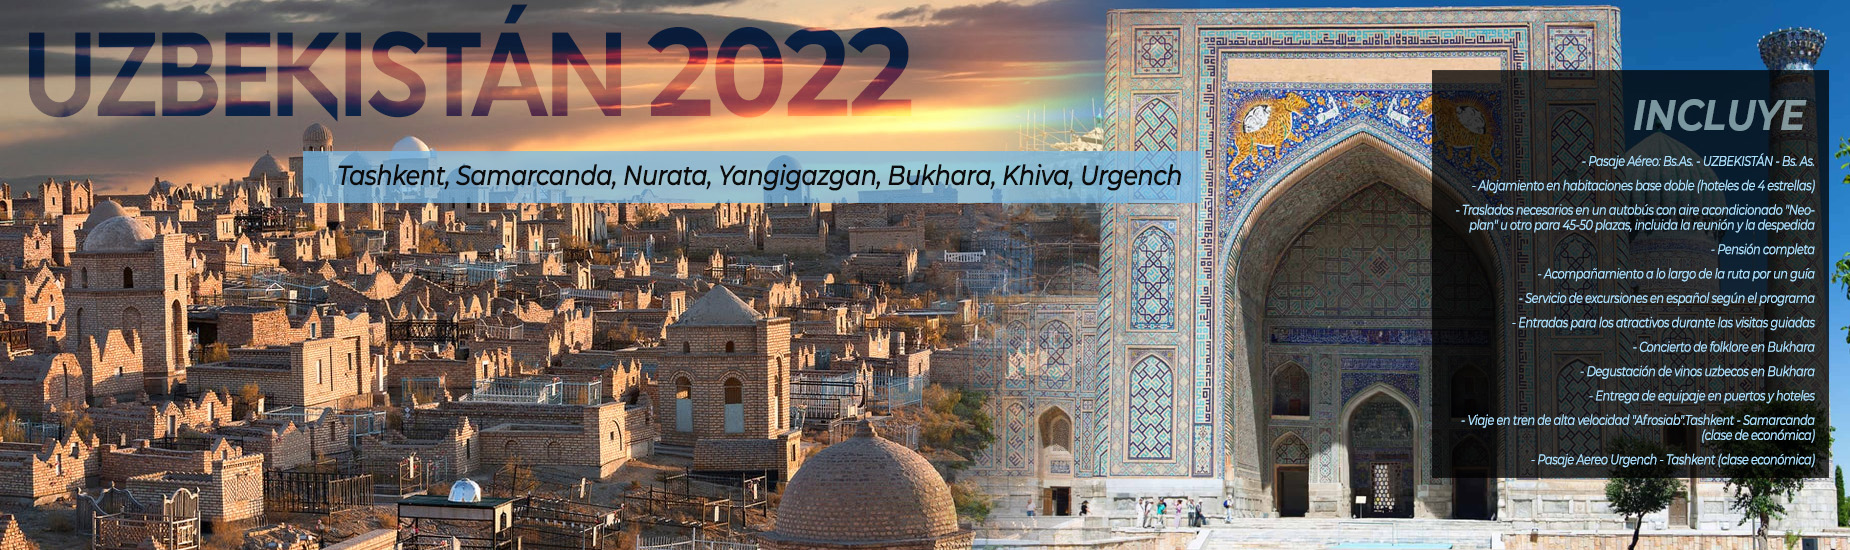 Uzbequistán 2022